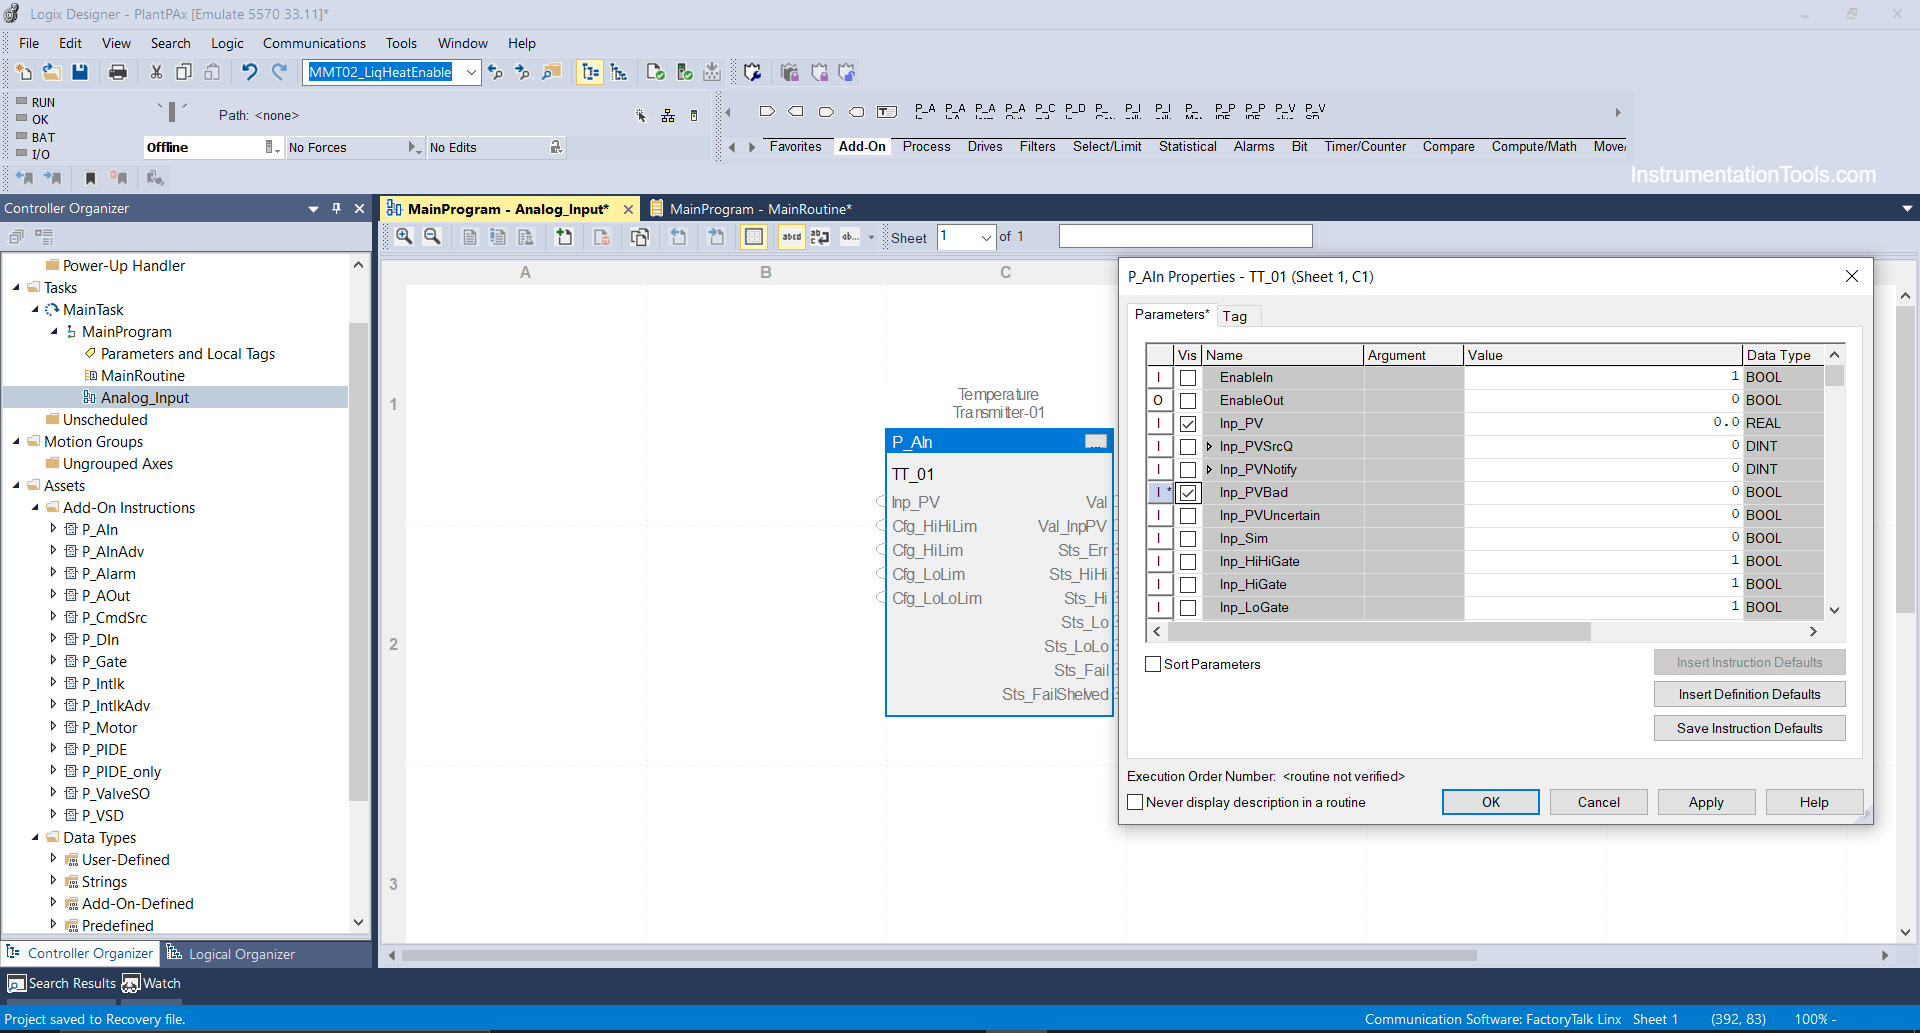 parameters in logix designer